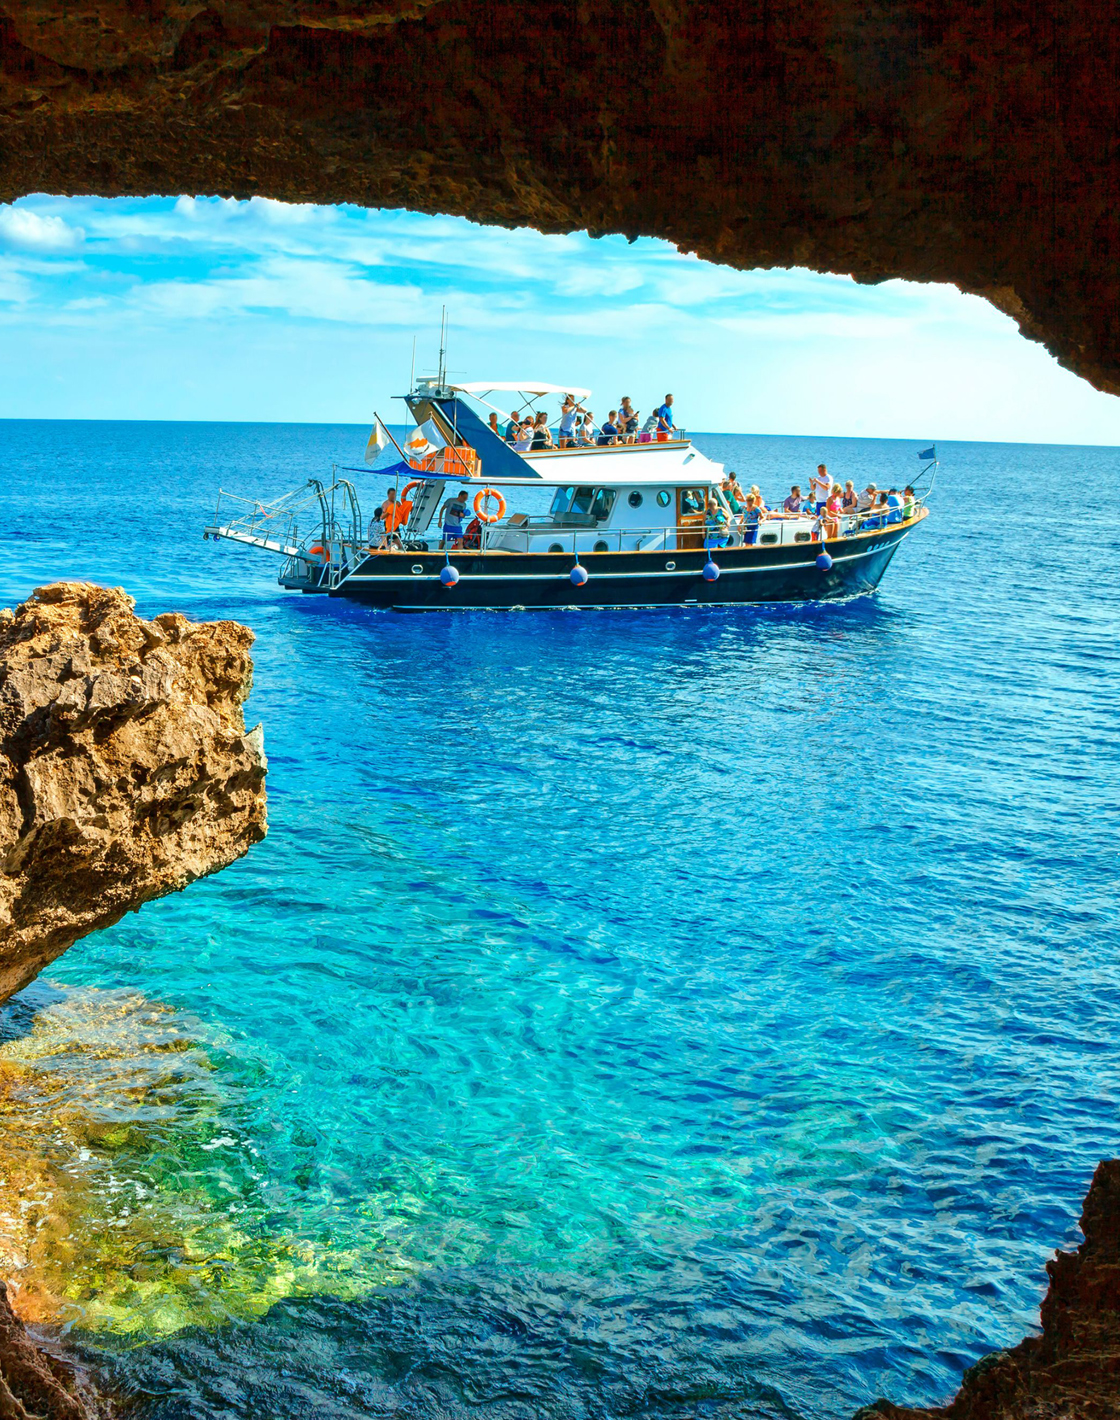 Cyprus Sea Caves Trail